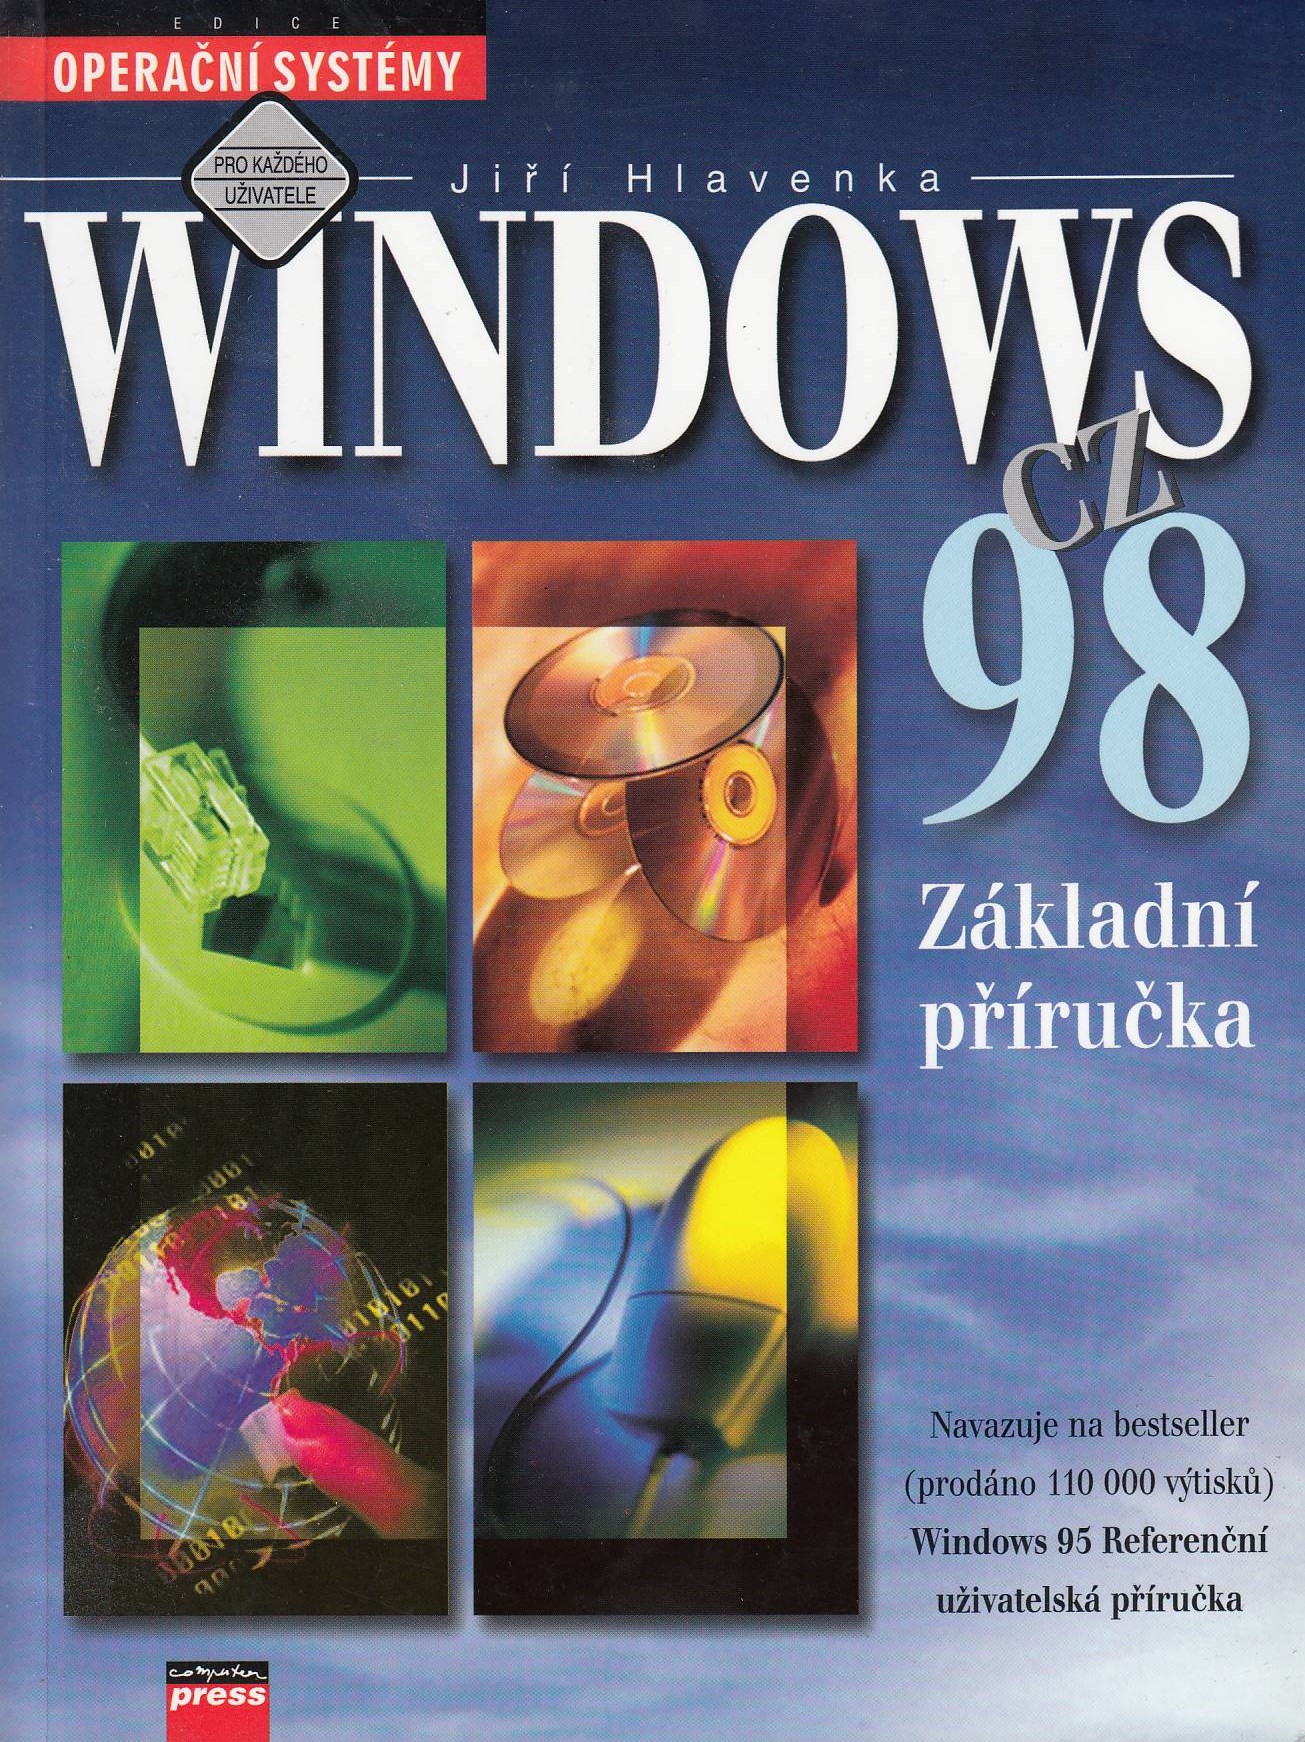 Windows CZ 98